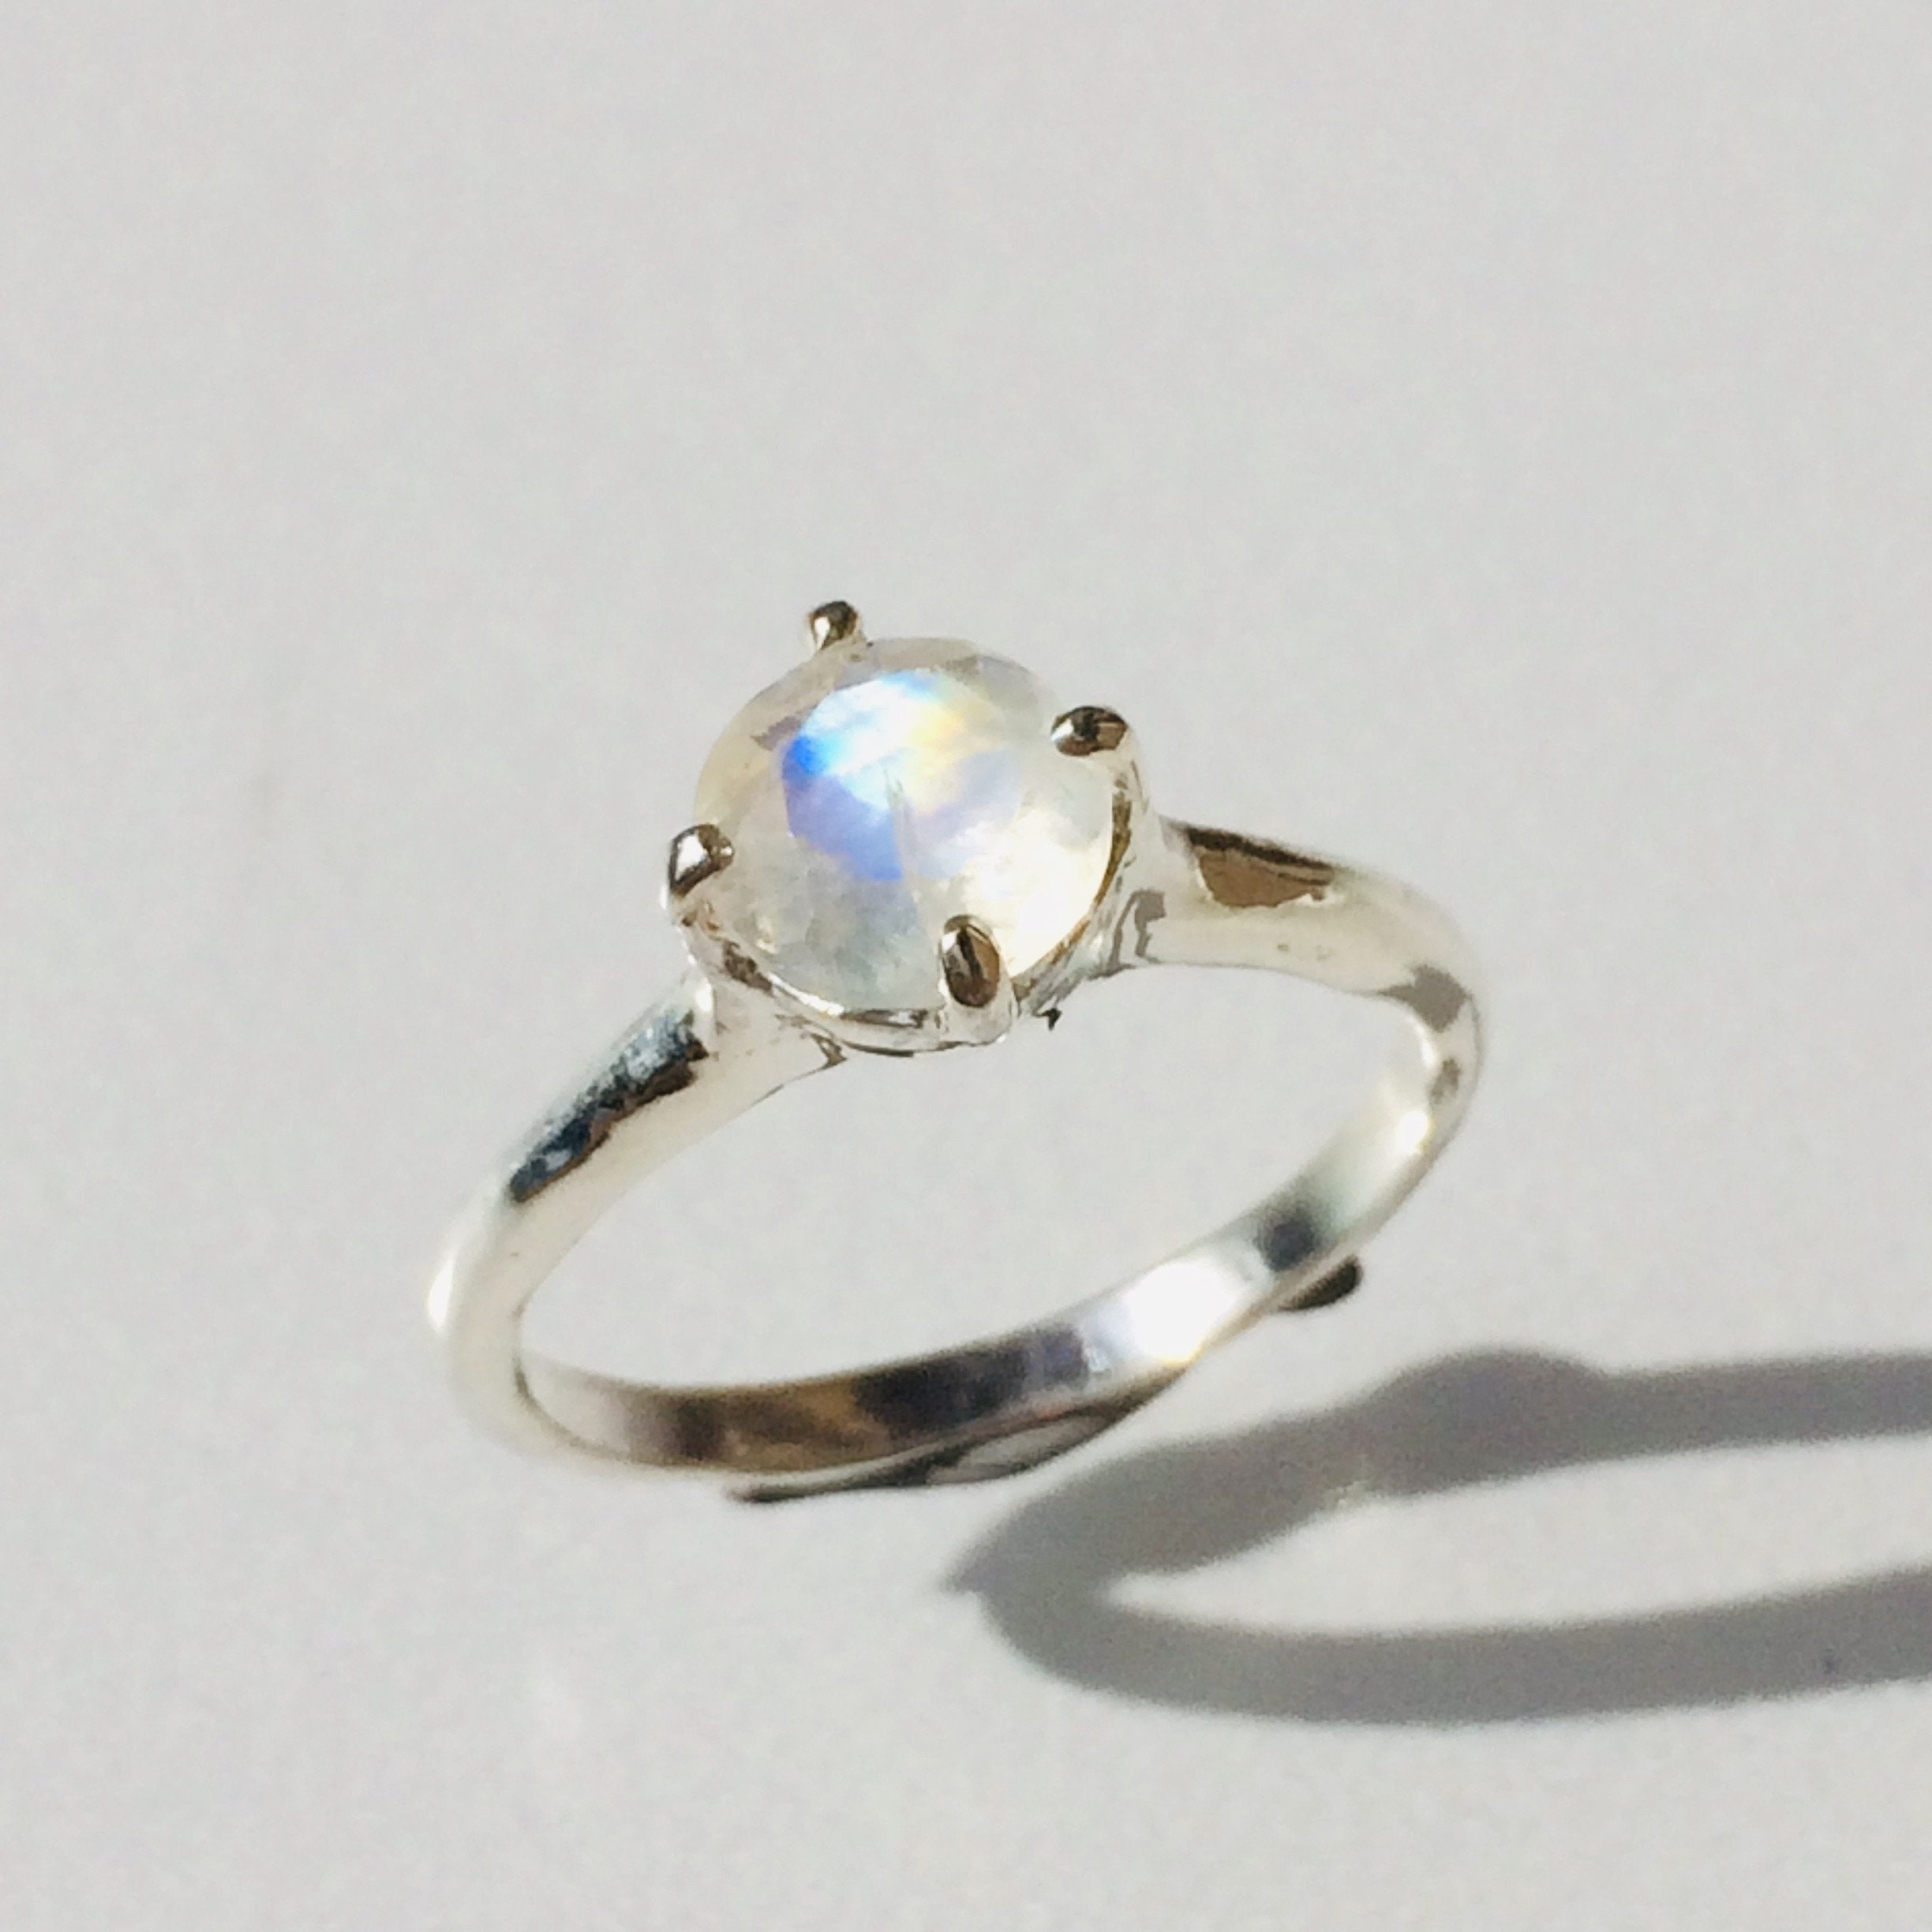 Moonstone Engagement Ring Alternative Wedding Jewelry - Etsy